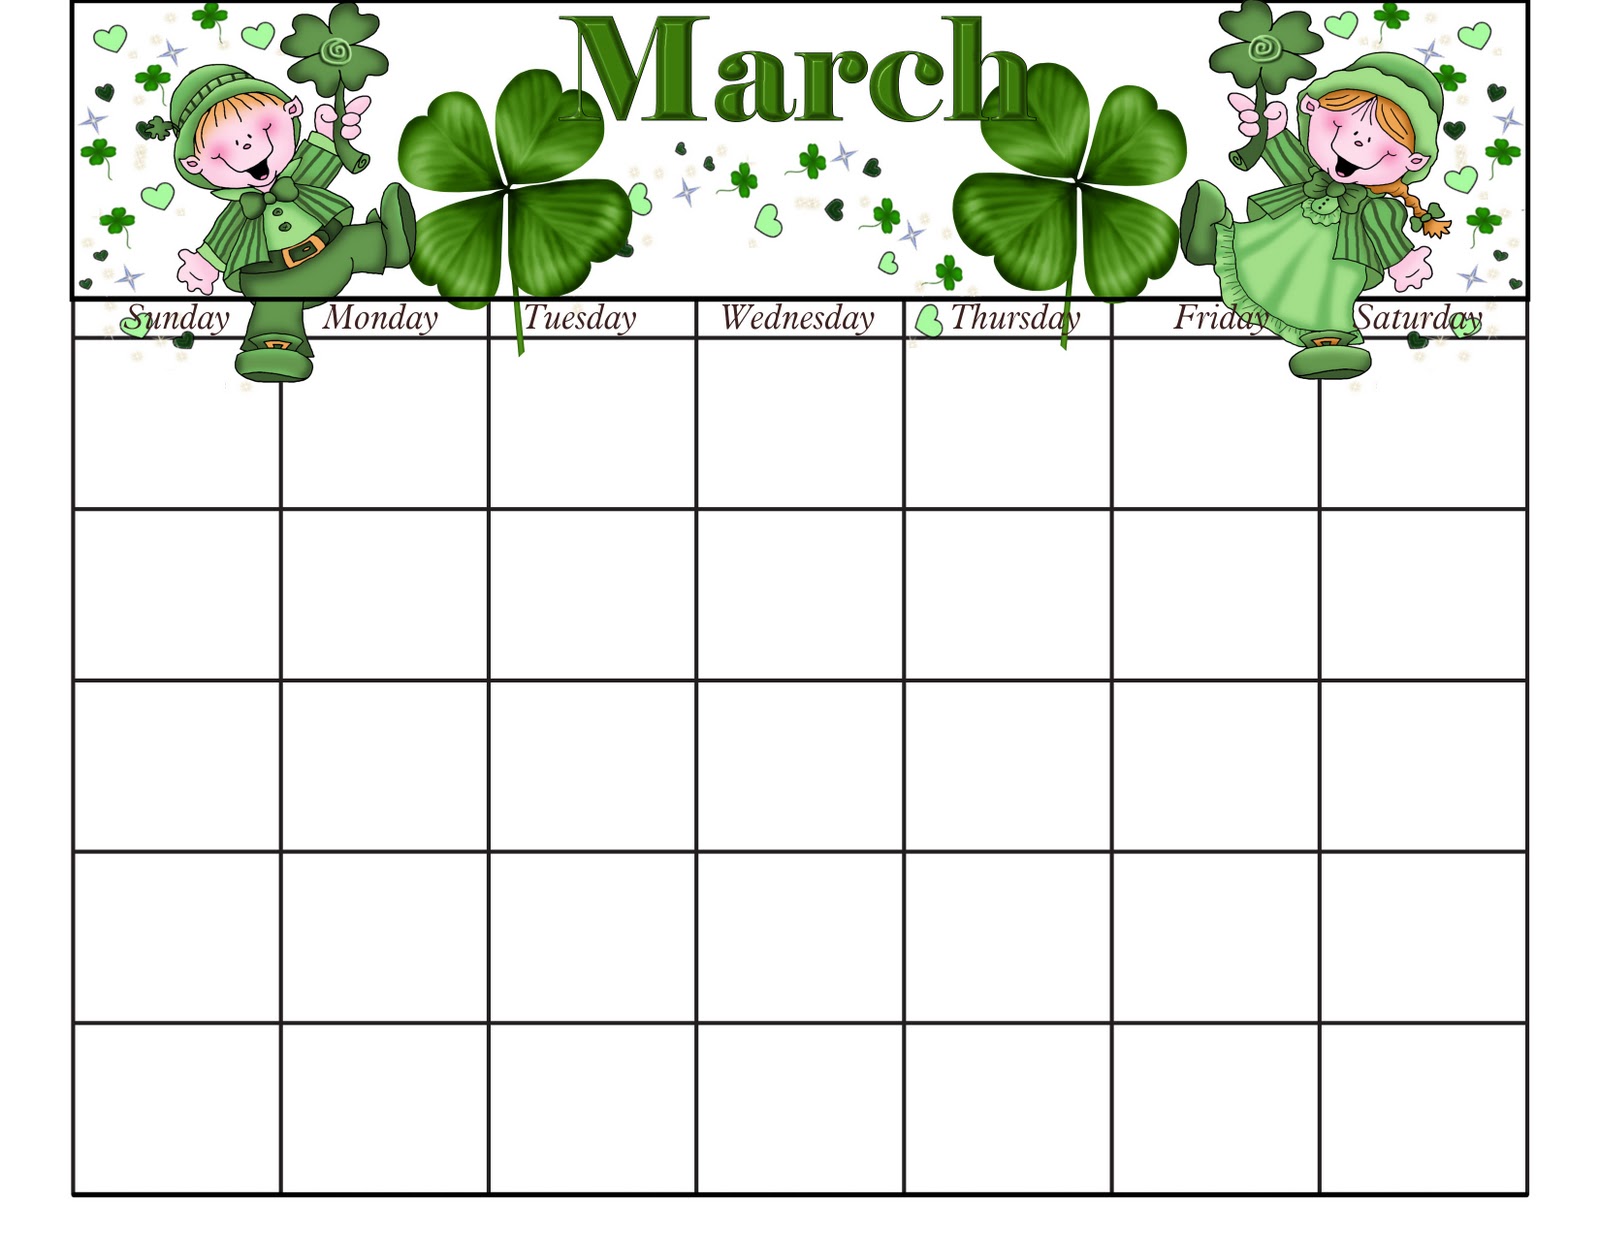 patty-wraps-march-calendar